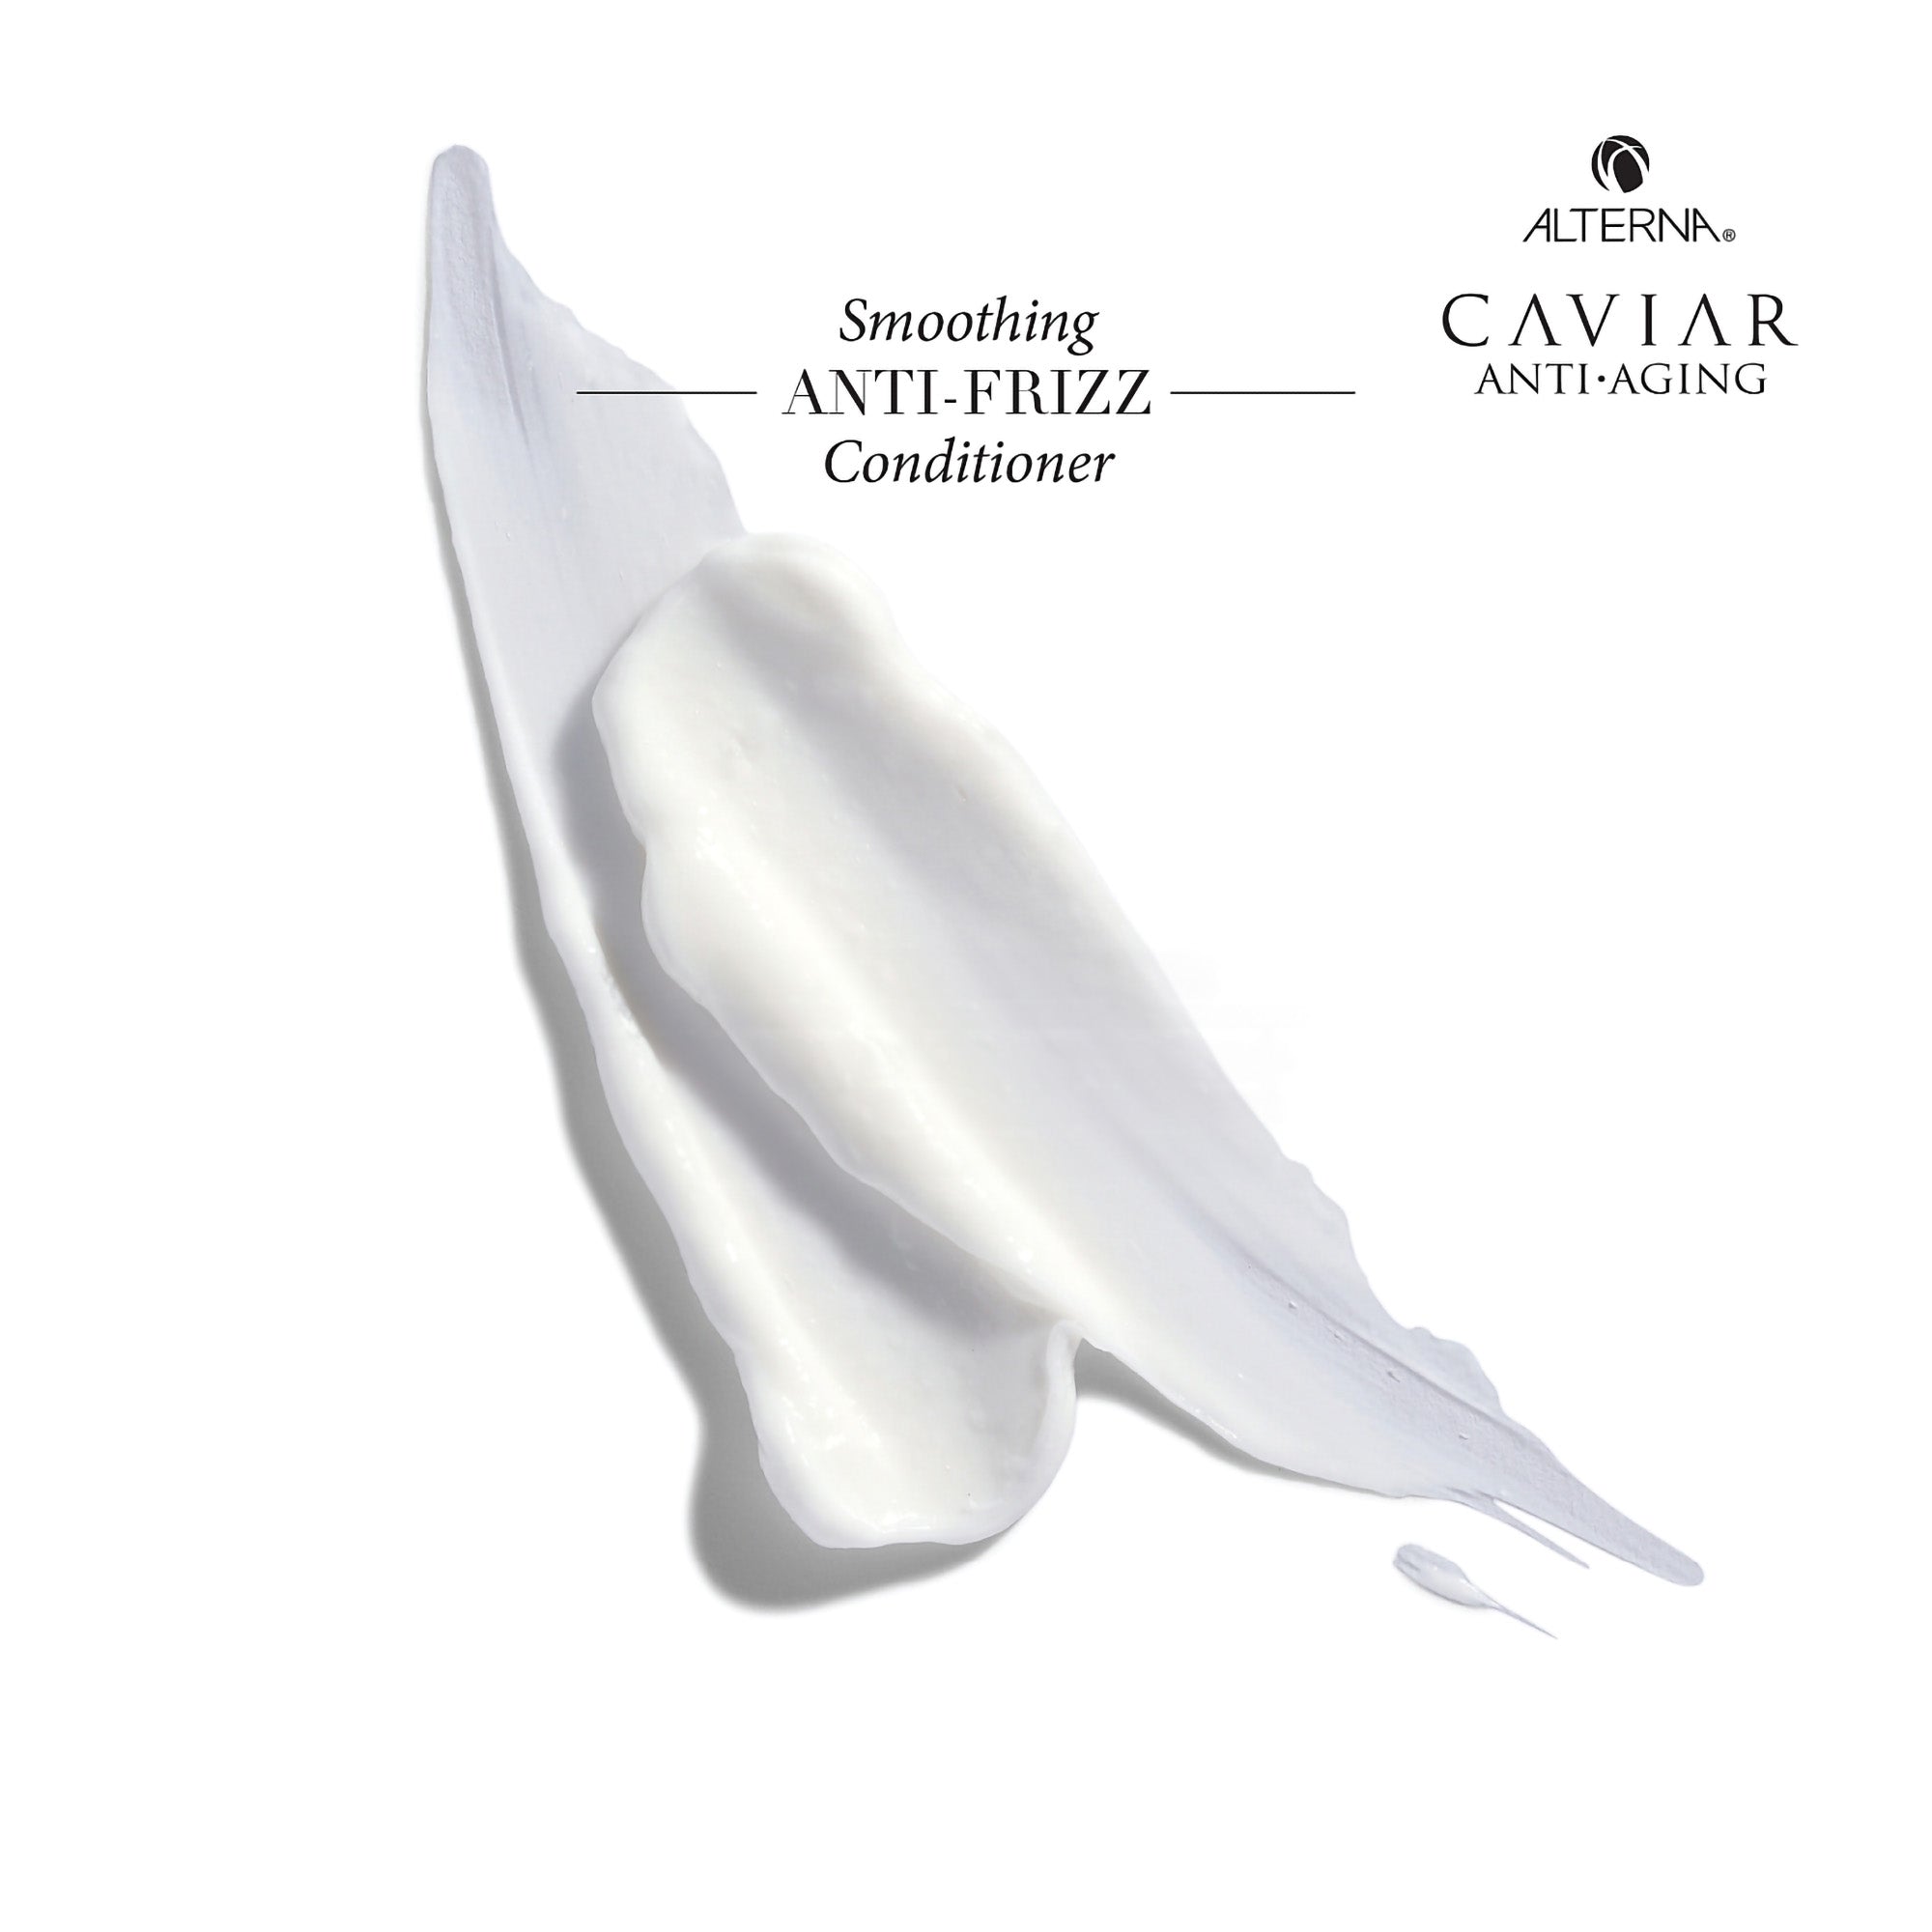 Alterna Caviar Anti-Aging Smoothing Anti-Frizz Conditioner / 8.5OZ